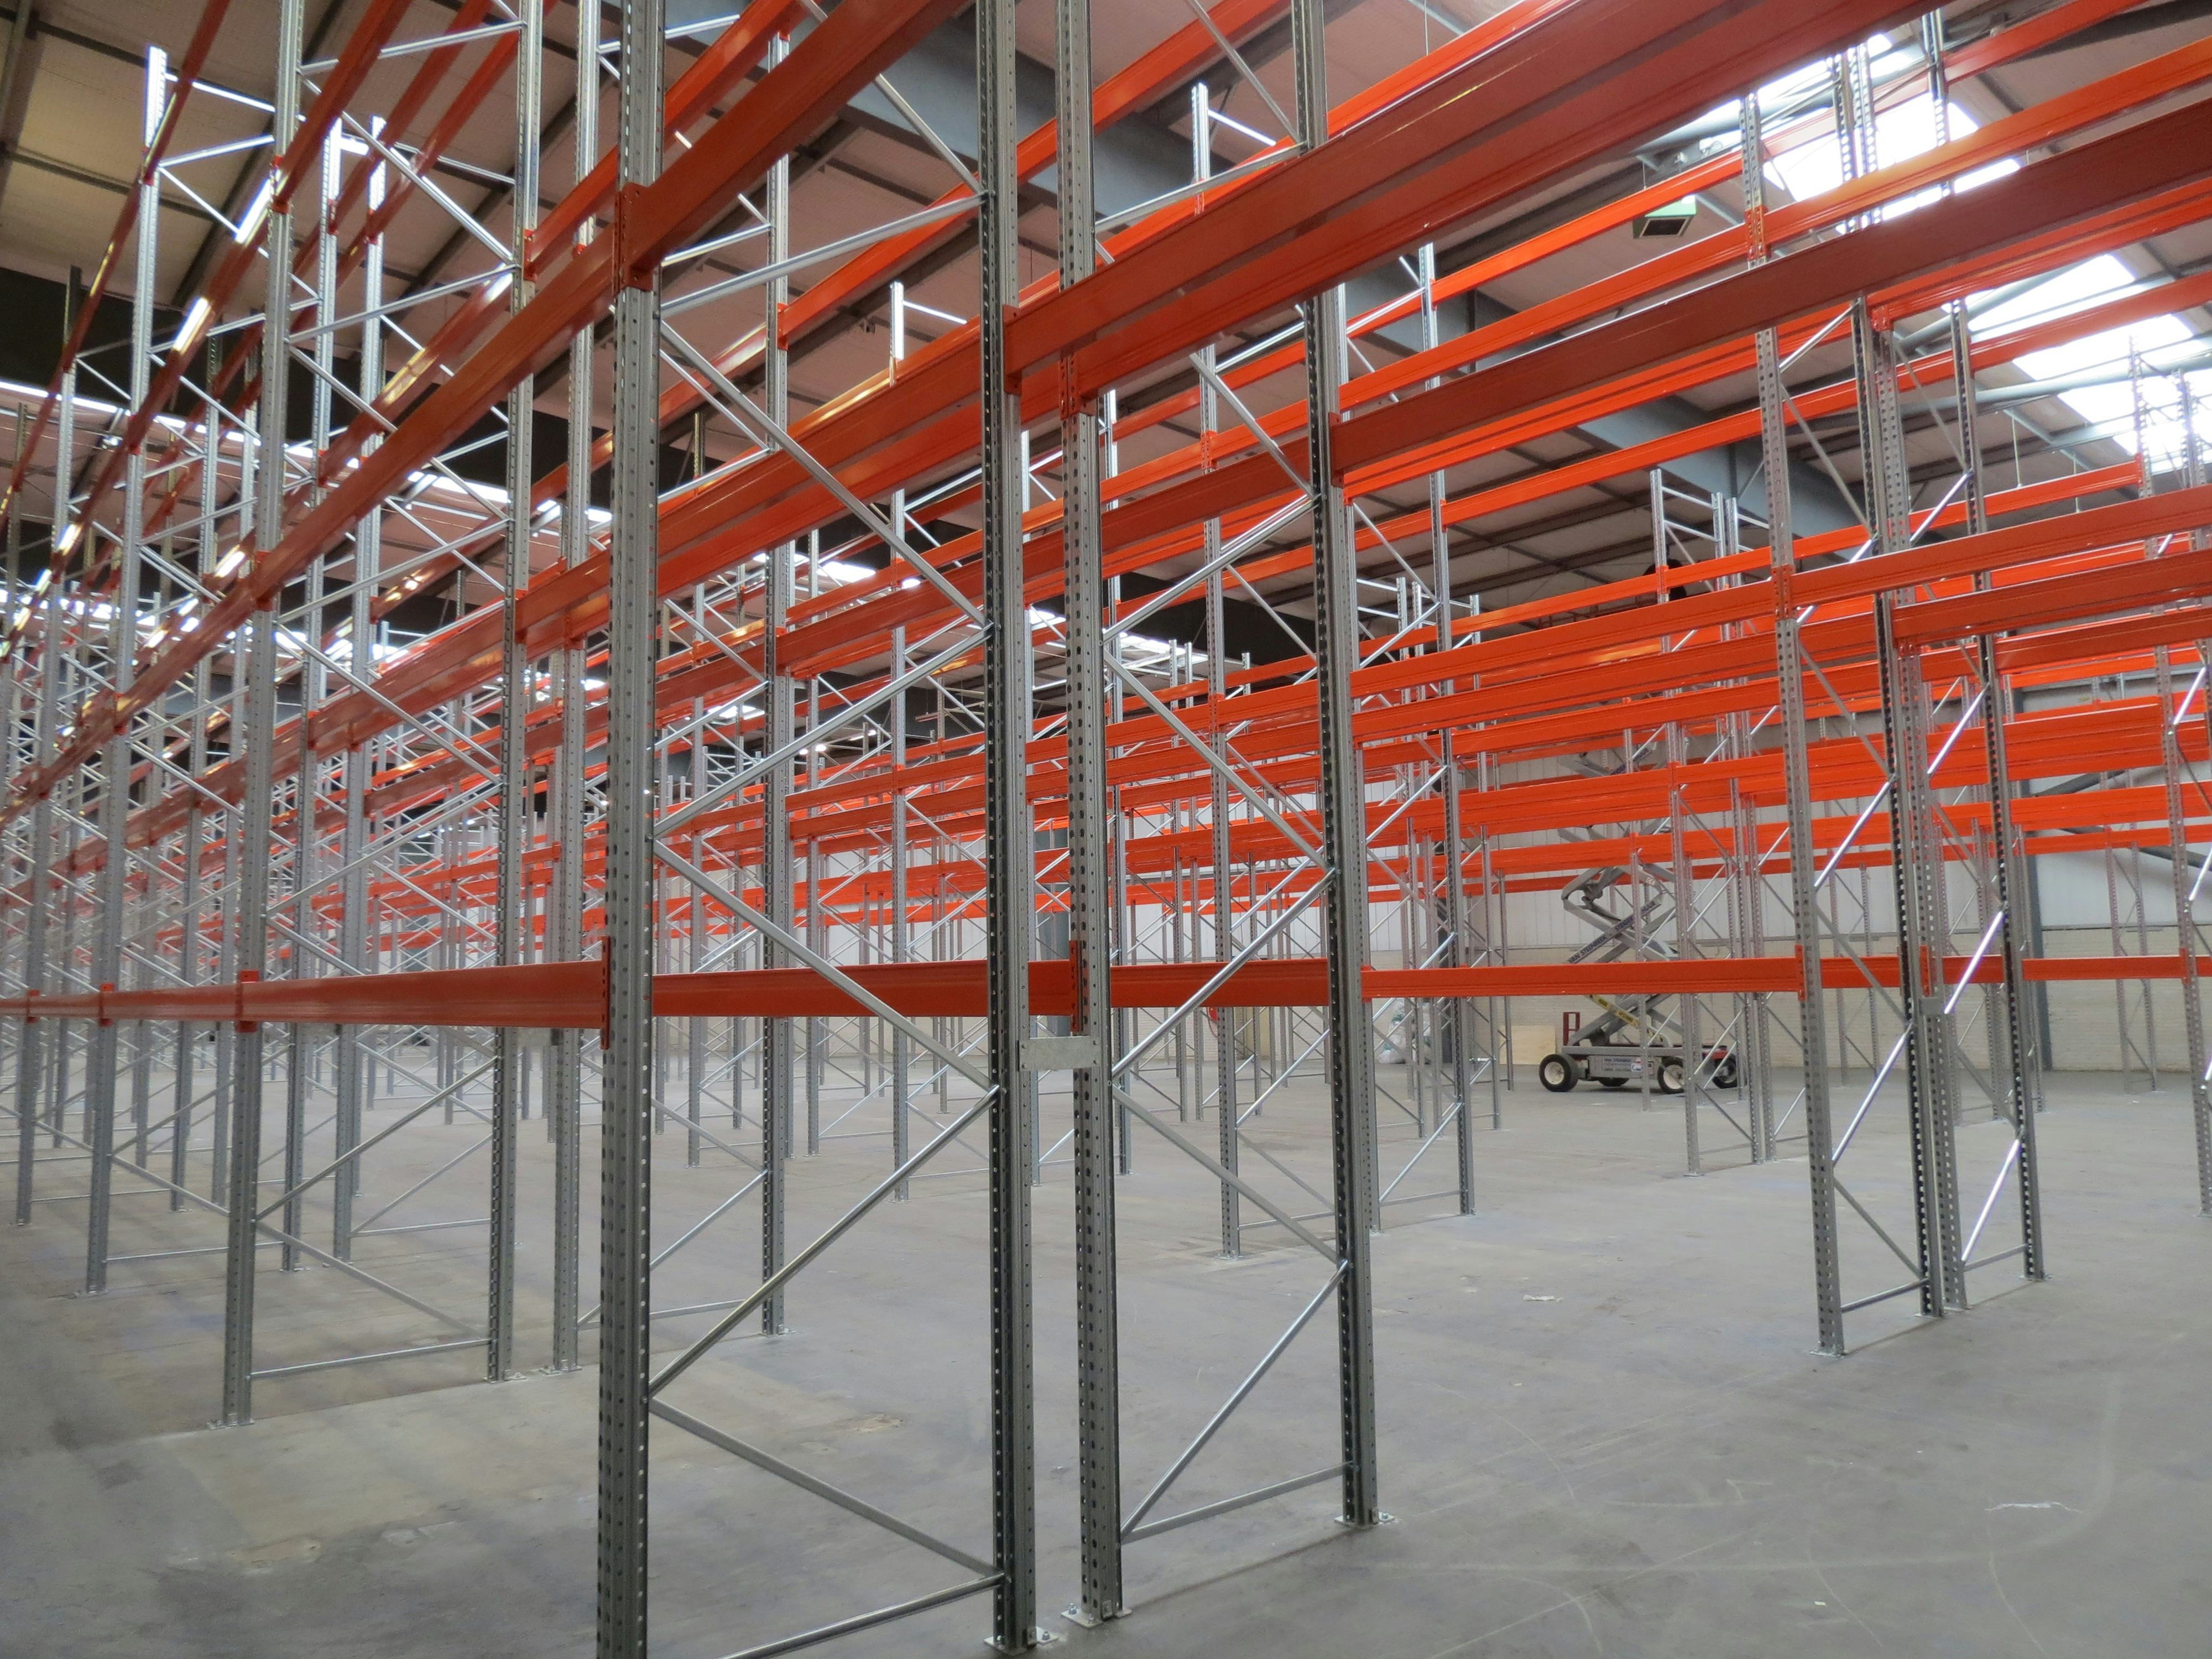 Rotra faciliteert groei terminal met nieuw warehouse